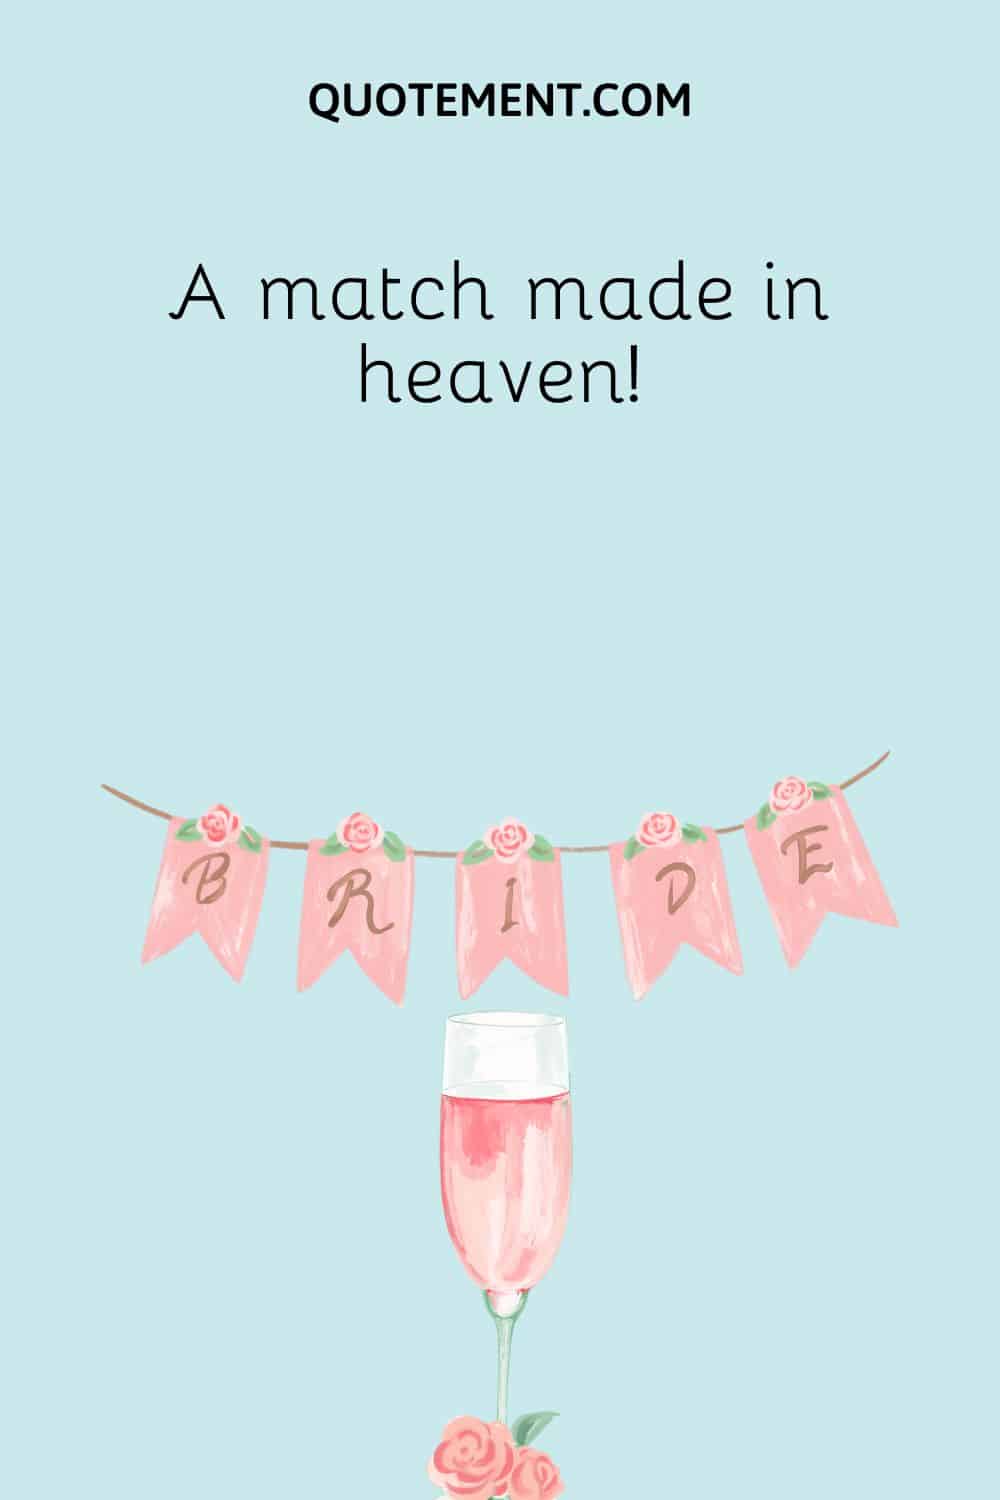 A match made in heaven!